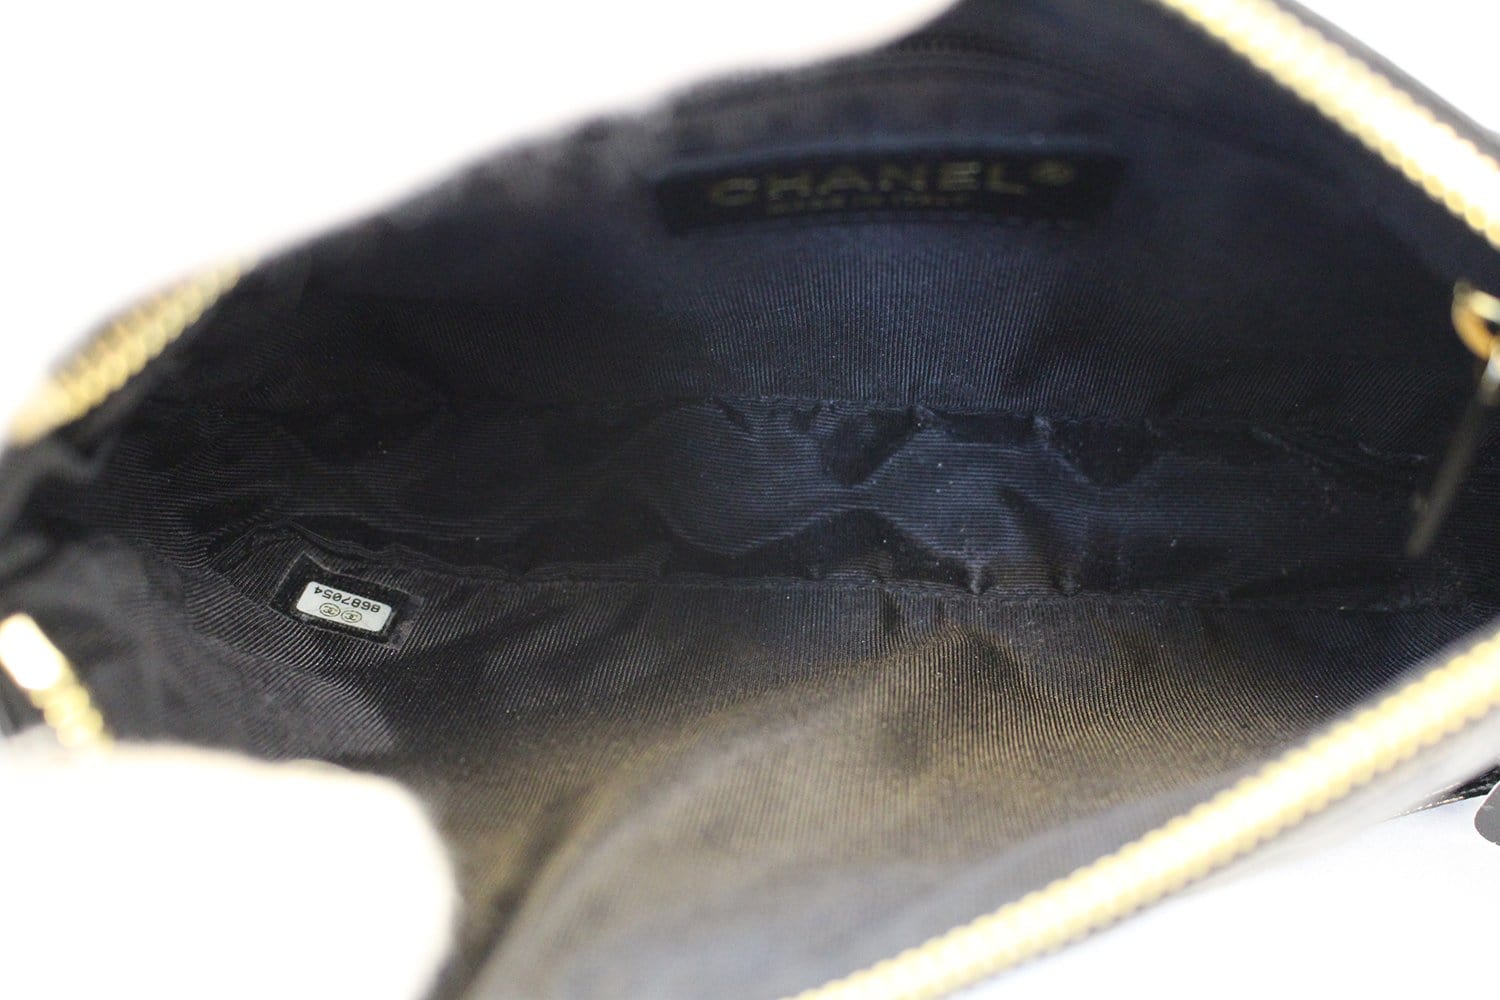 Chanel Shoulder Bag - CHANEL Black Sac Divers Mini Caviar